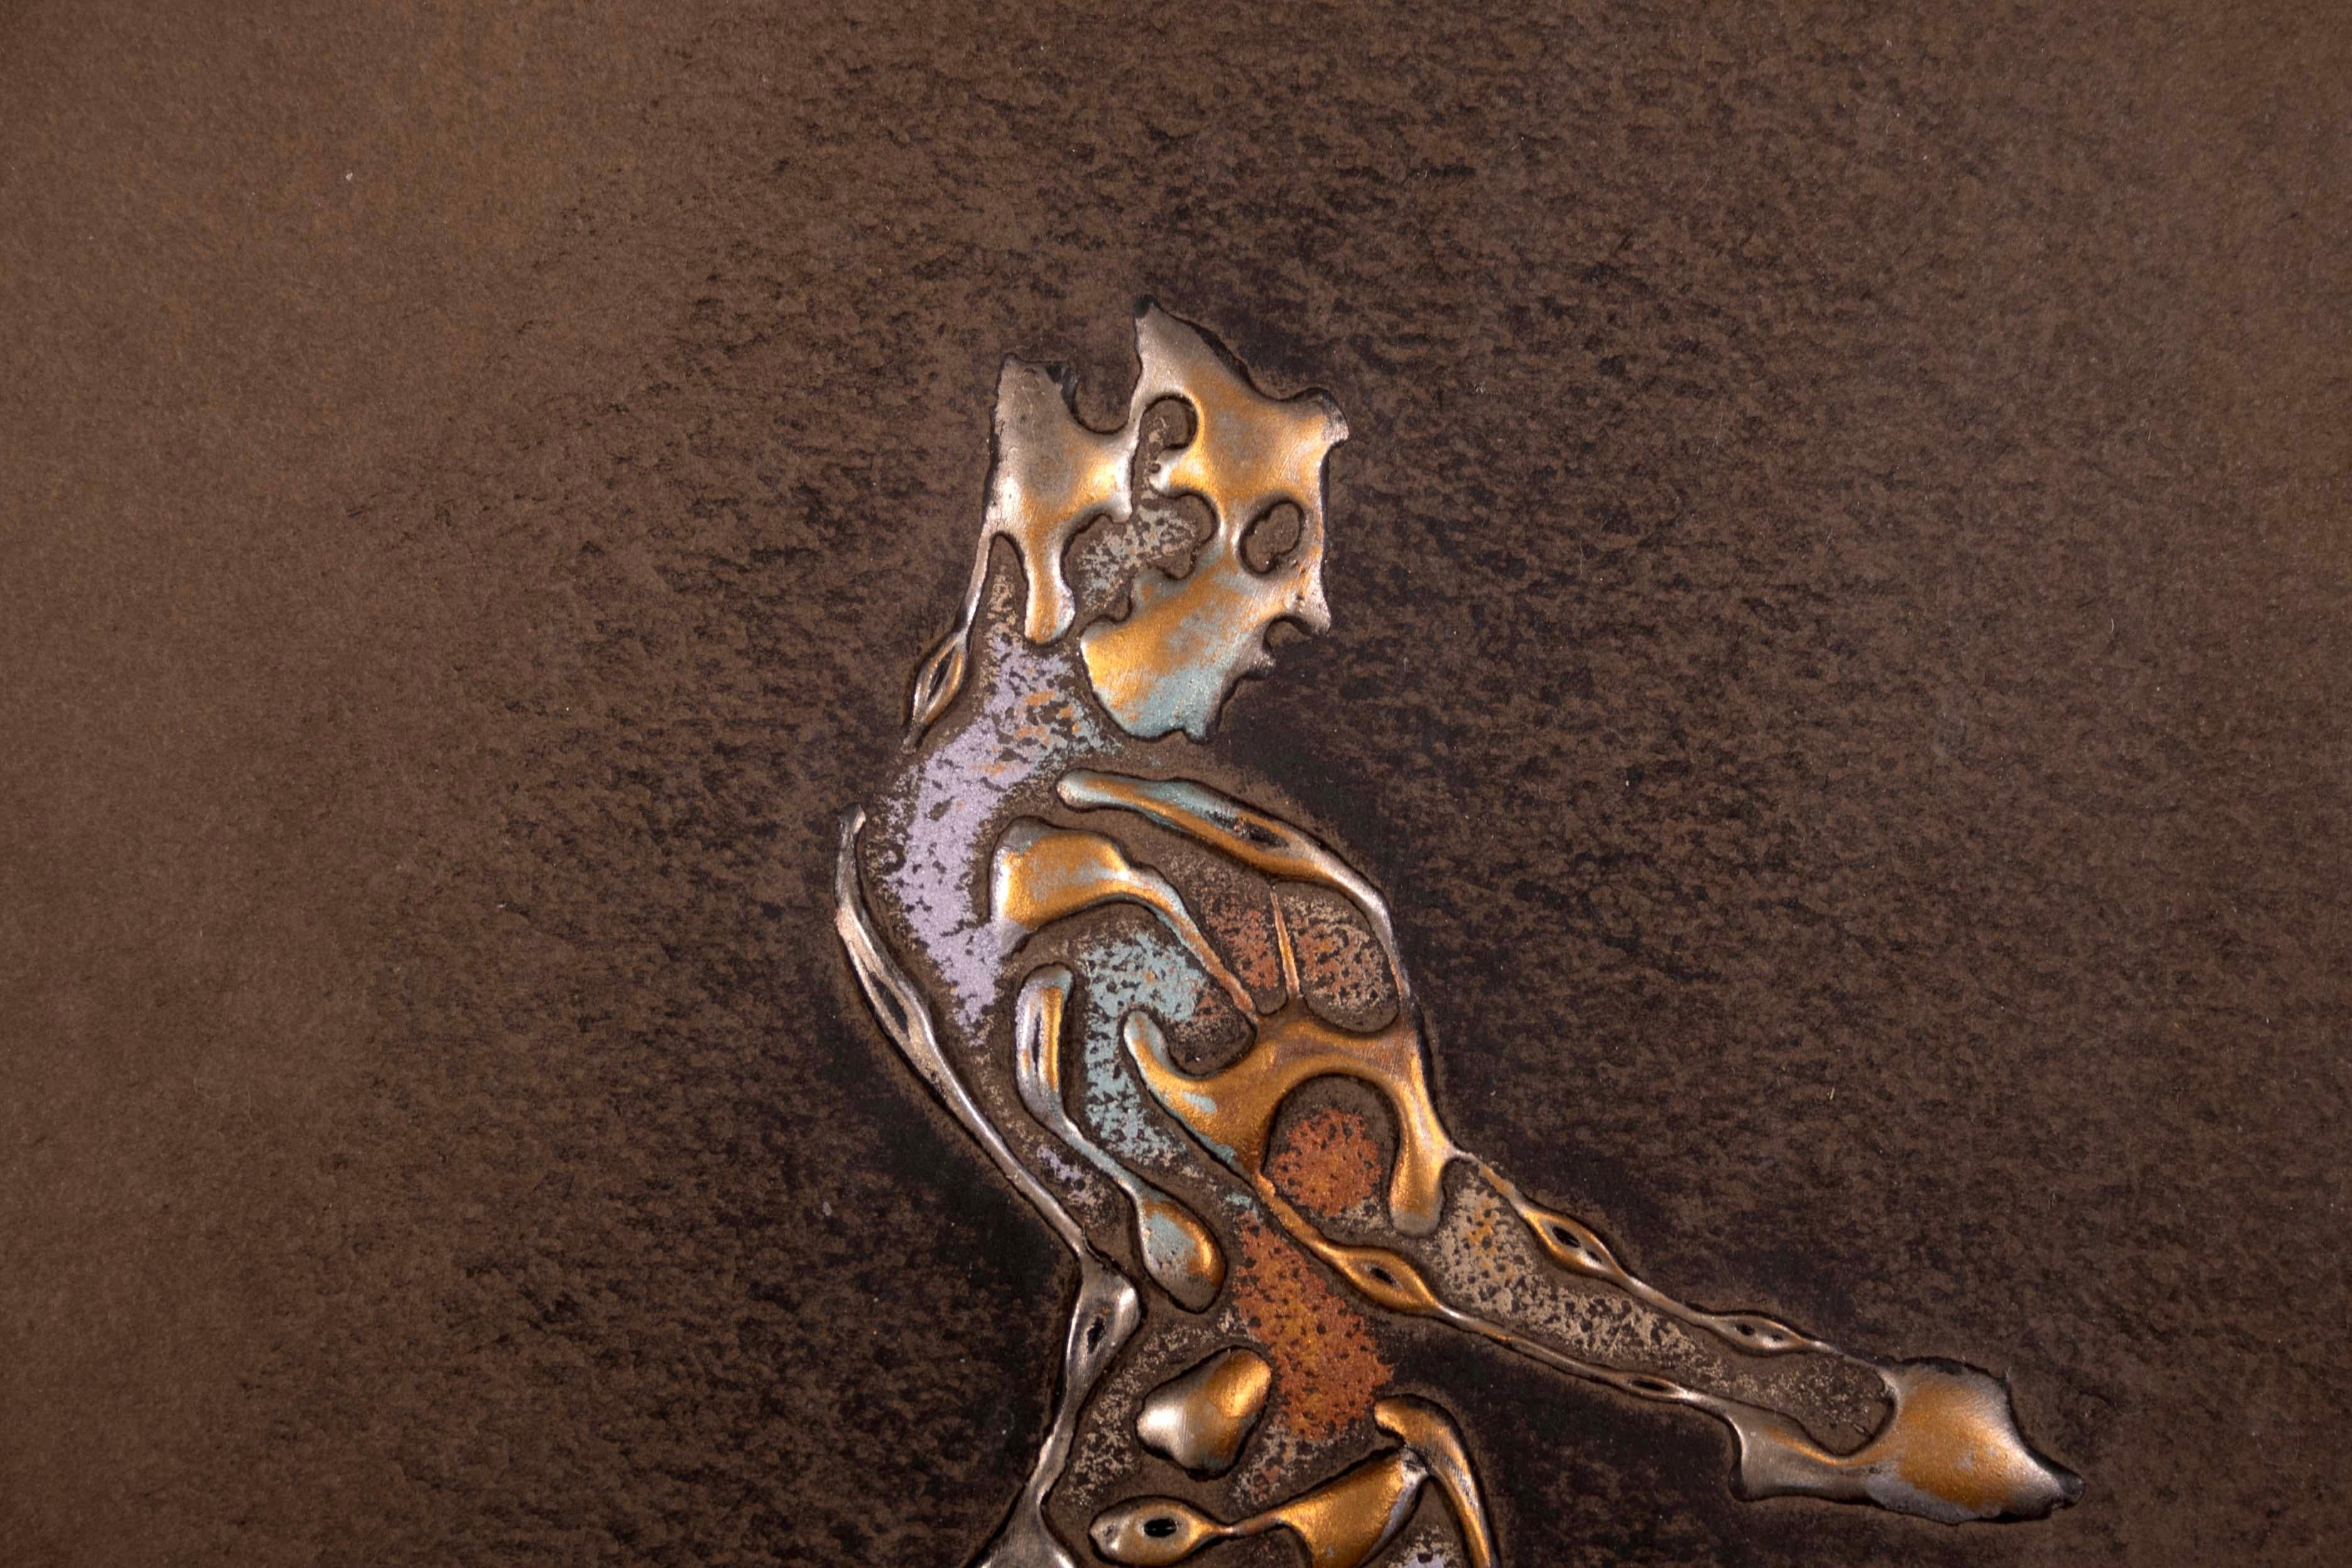 Joel Zaretsky Signed Contemporary Modernist Figurative Mixed Media Metallic Art In Good Condition For Sale In Keego Harbor, MI